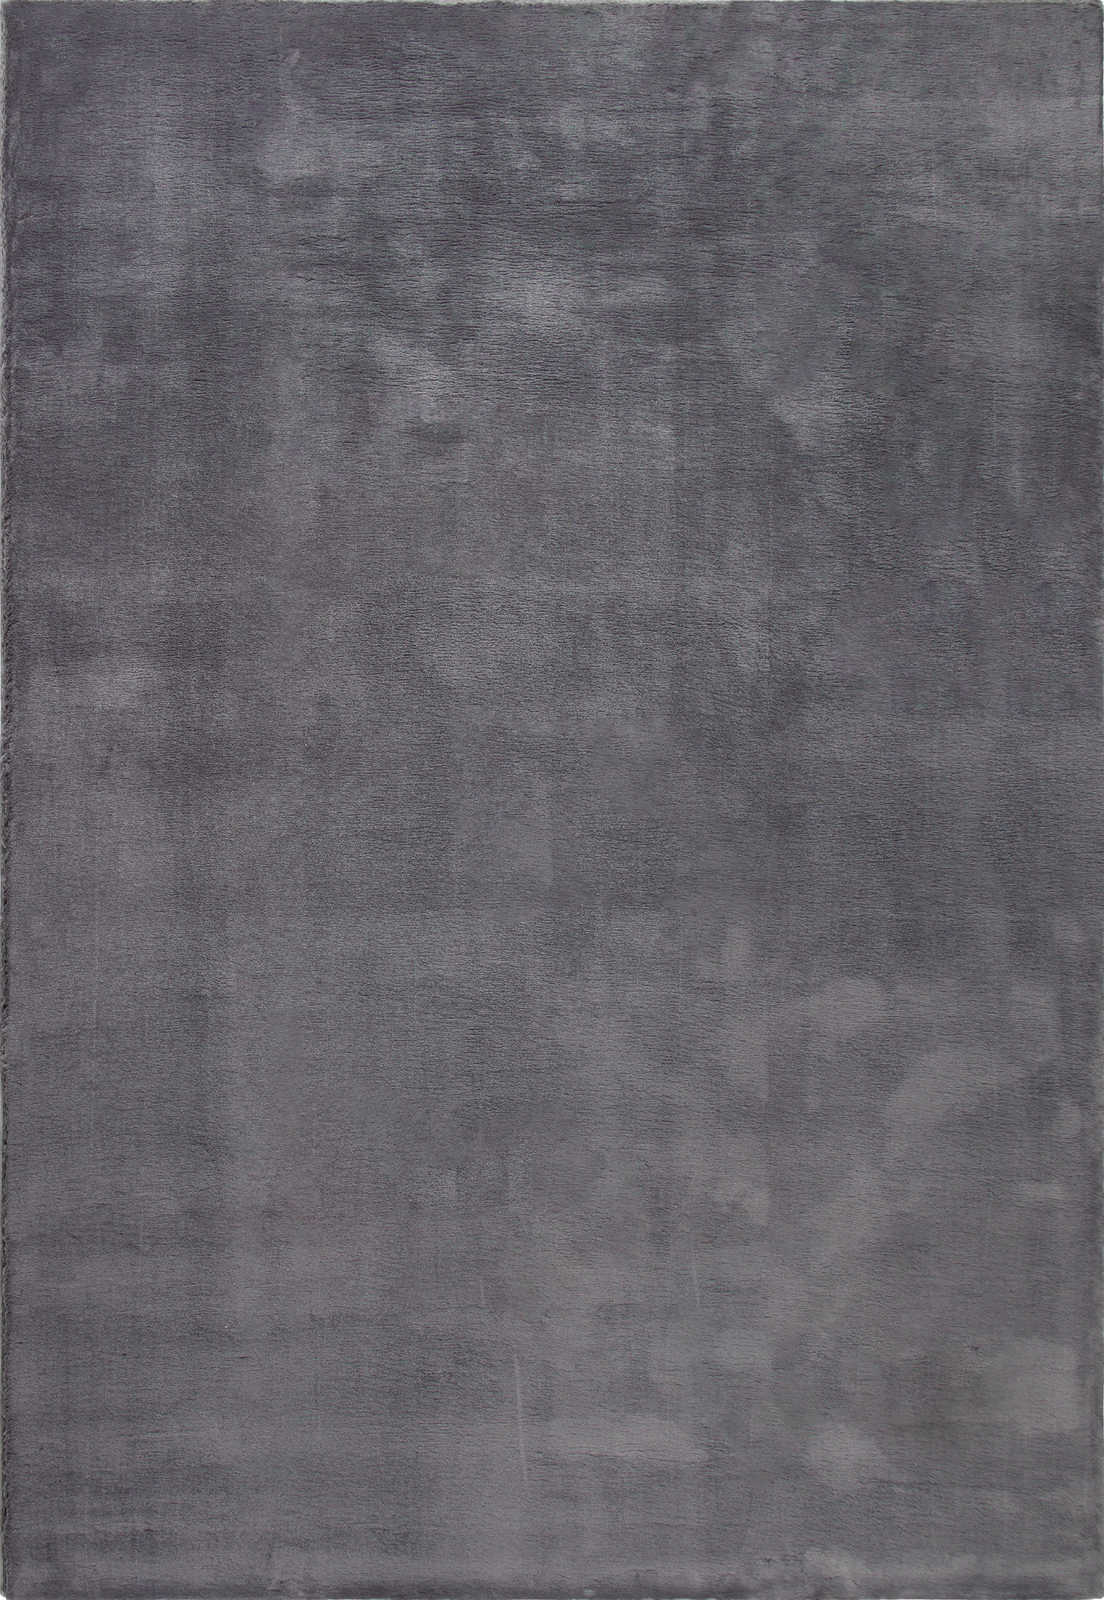             Tapis moderne à poils longs anthracite - 230 x 160 cm
        